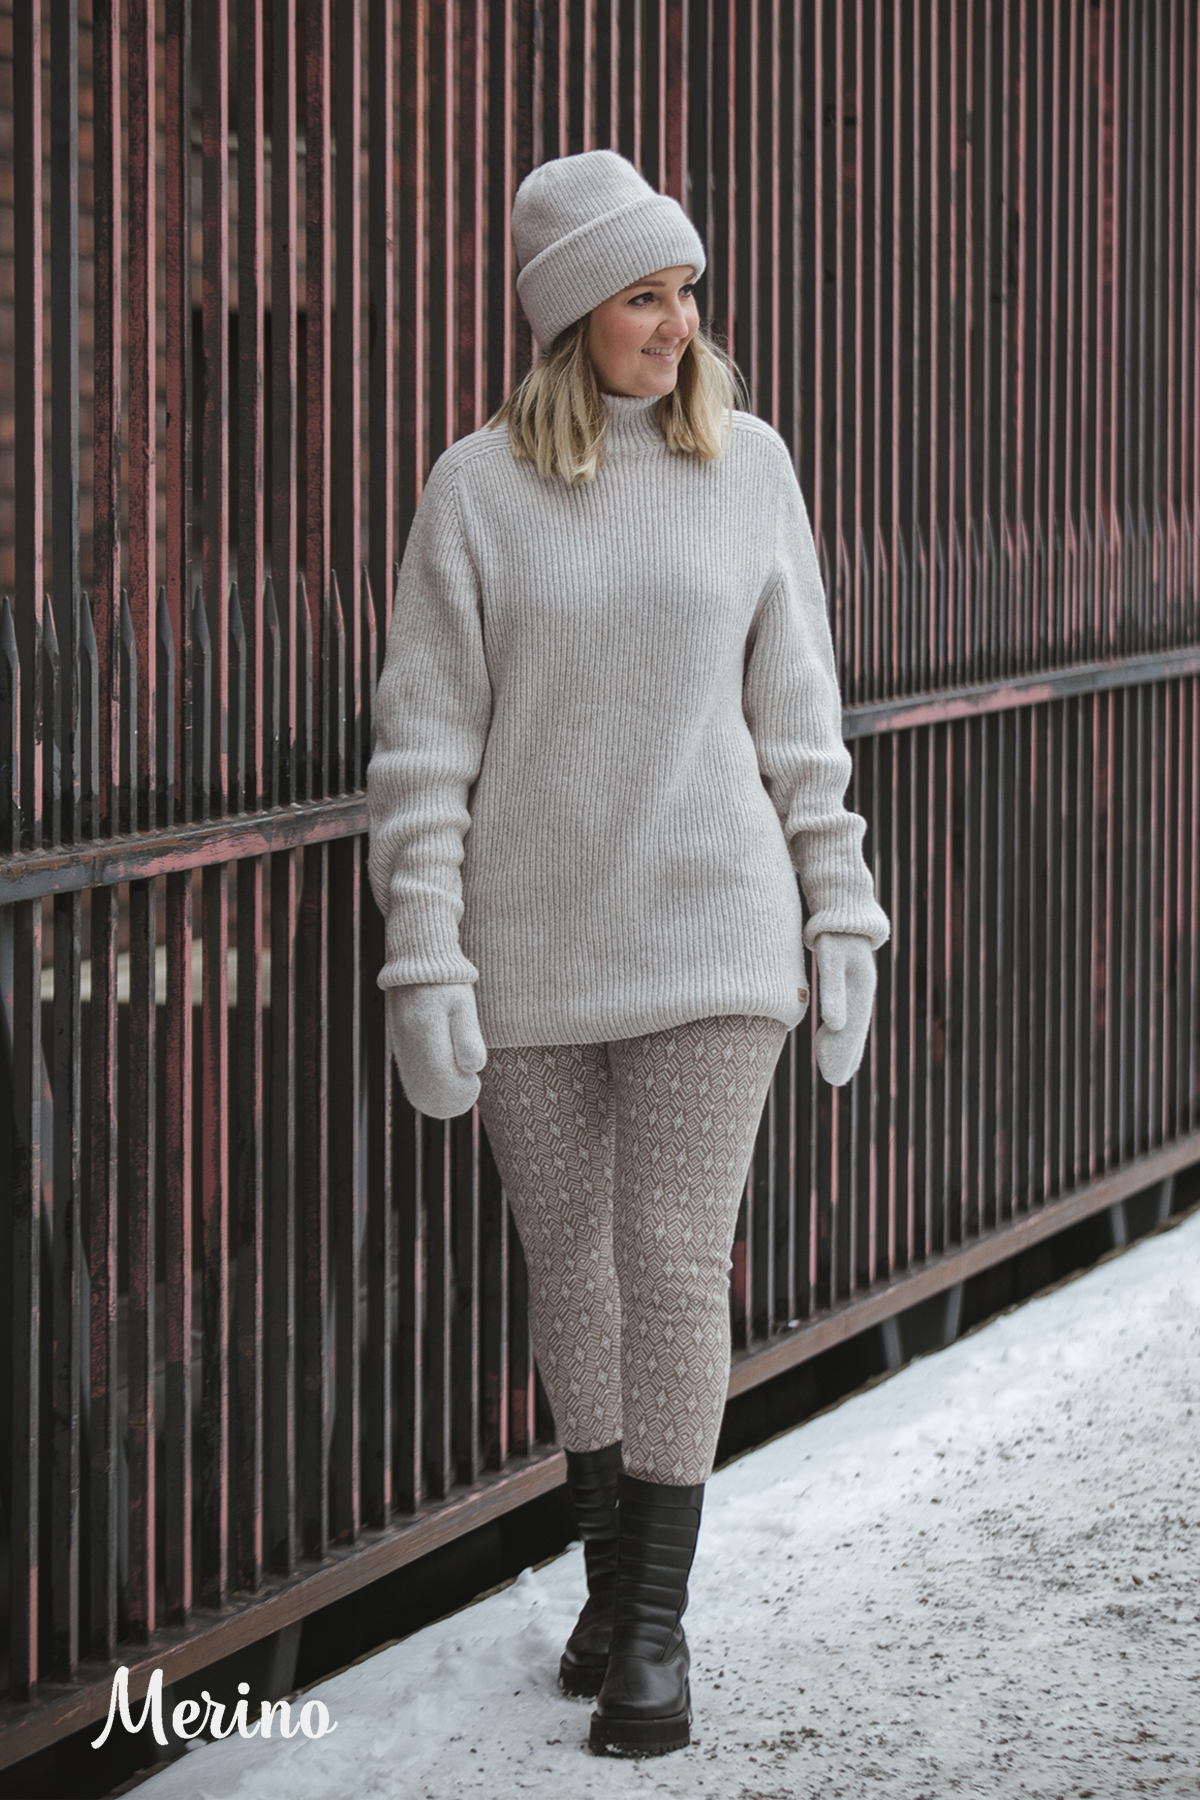 Merino wool leggings for adults - KIVATSHOP